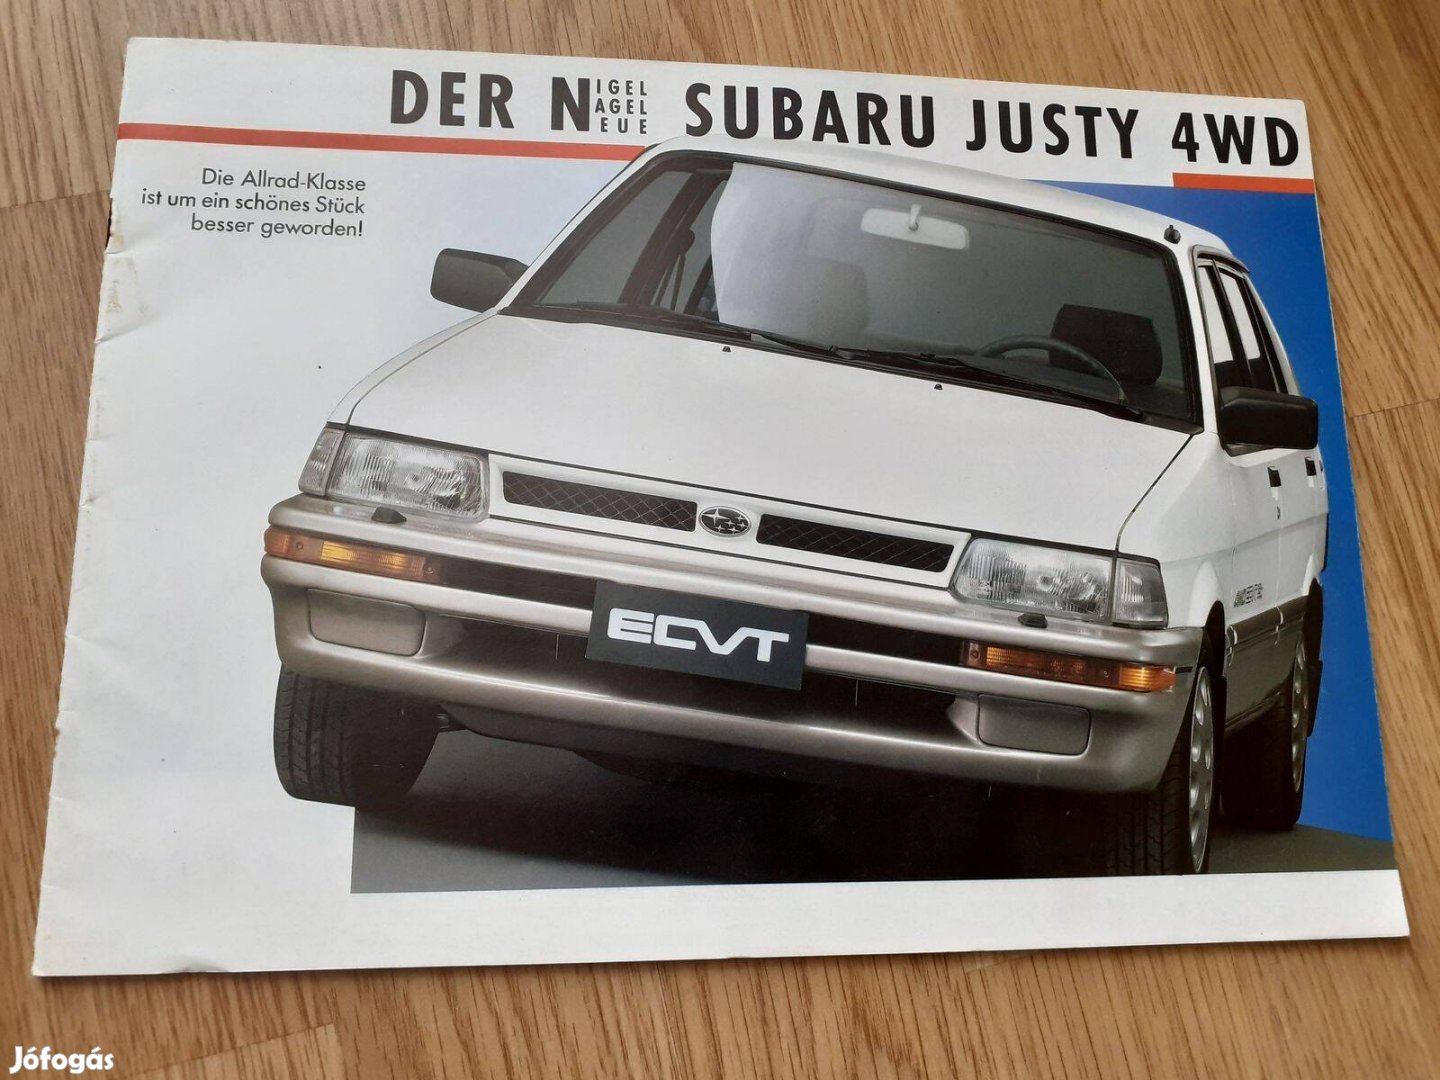 Subaru Justy prospektus - 1989, német nyelvű